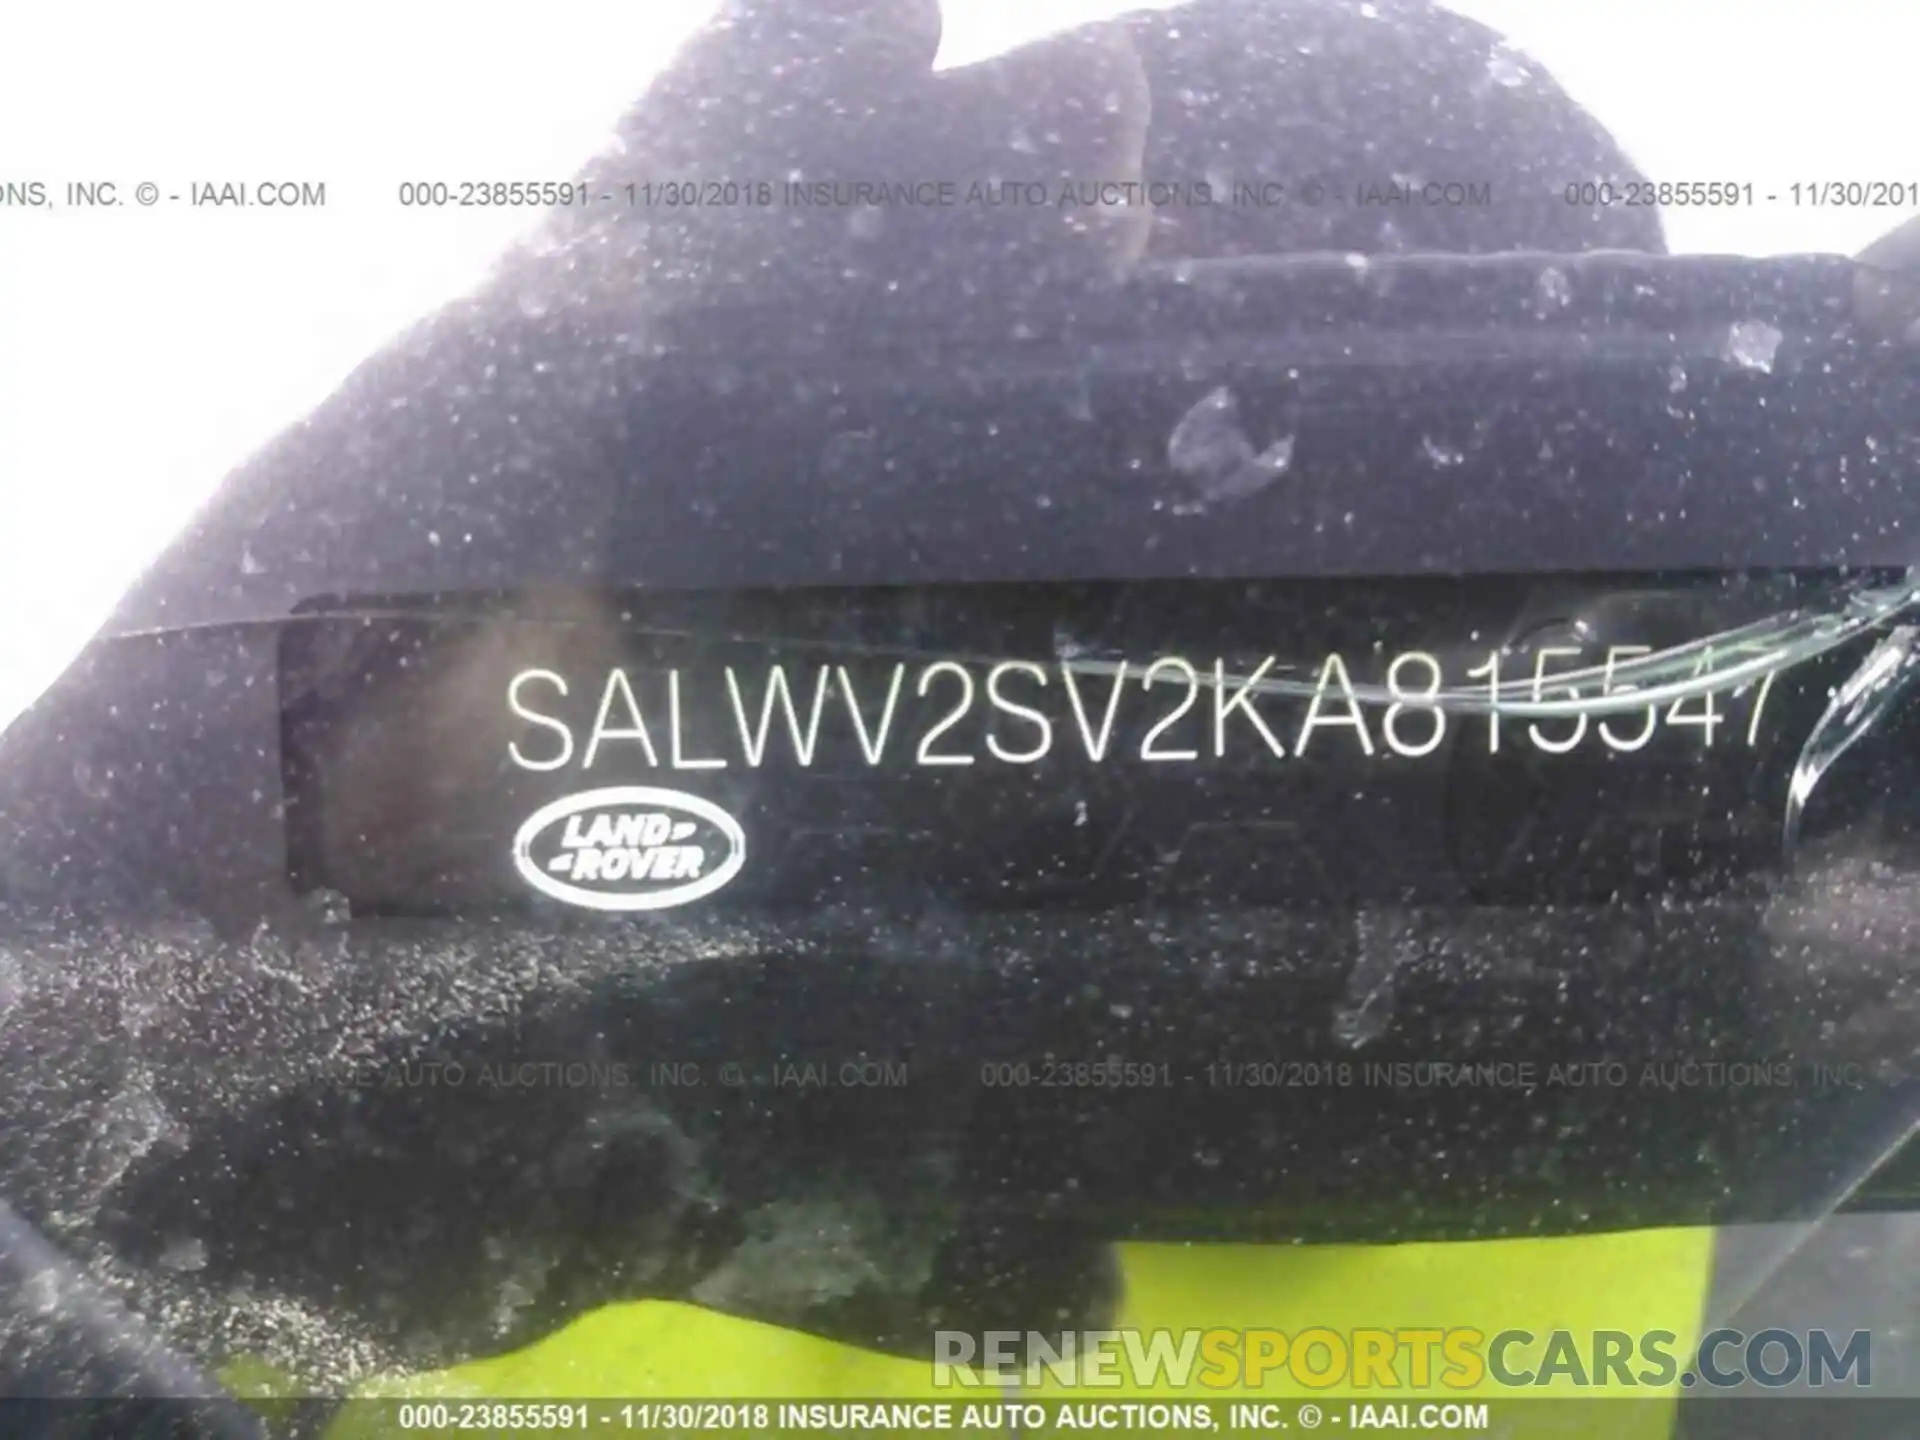 9 Photograph of a damaged car SALWV2SV2KA815547 LAND ROVER RANGE ROVER SPORT 2019